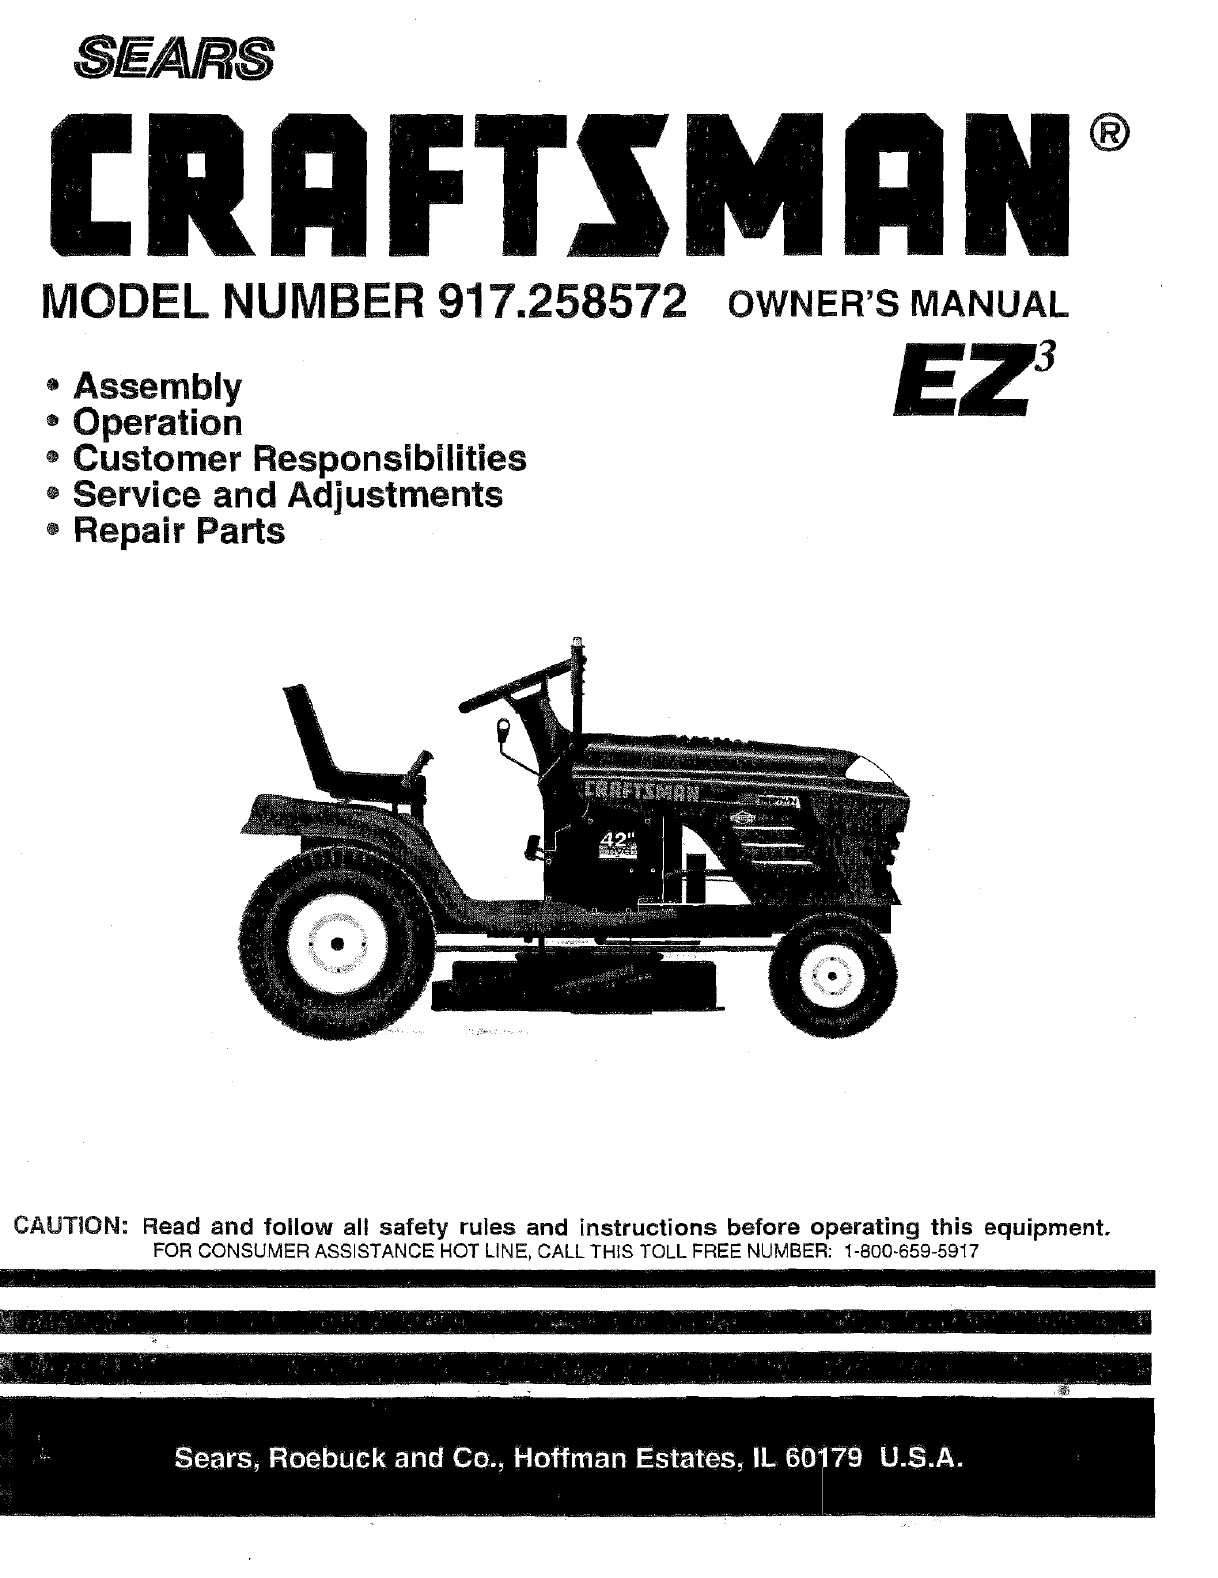 Craftsman Tractor Parts Diagram Craftsman User Manual Tractor Manuals and Guides Of Craftsman Tractor Parts Diagram